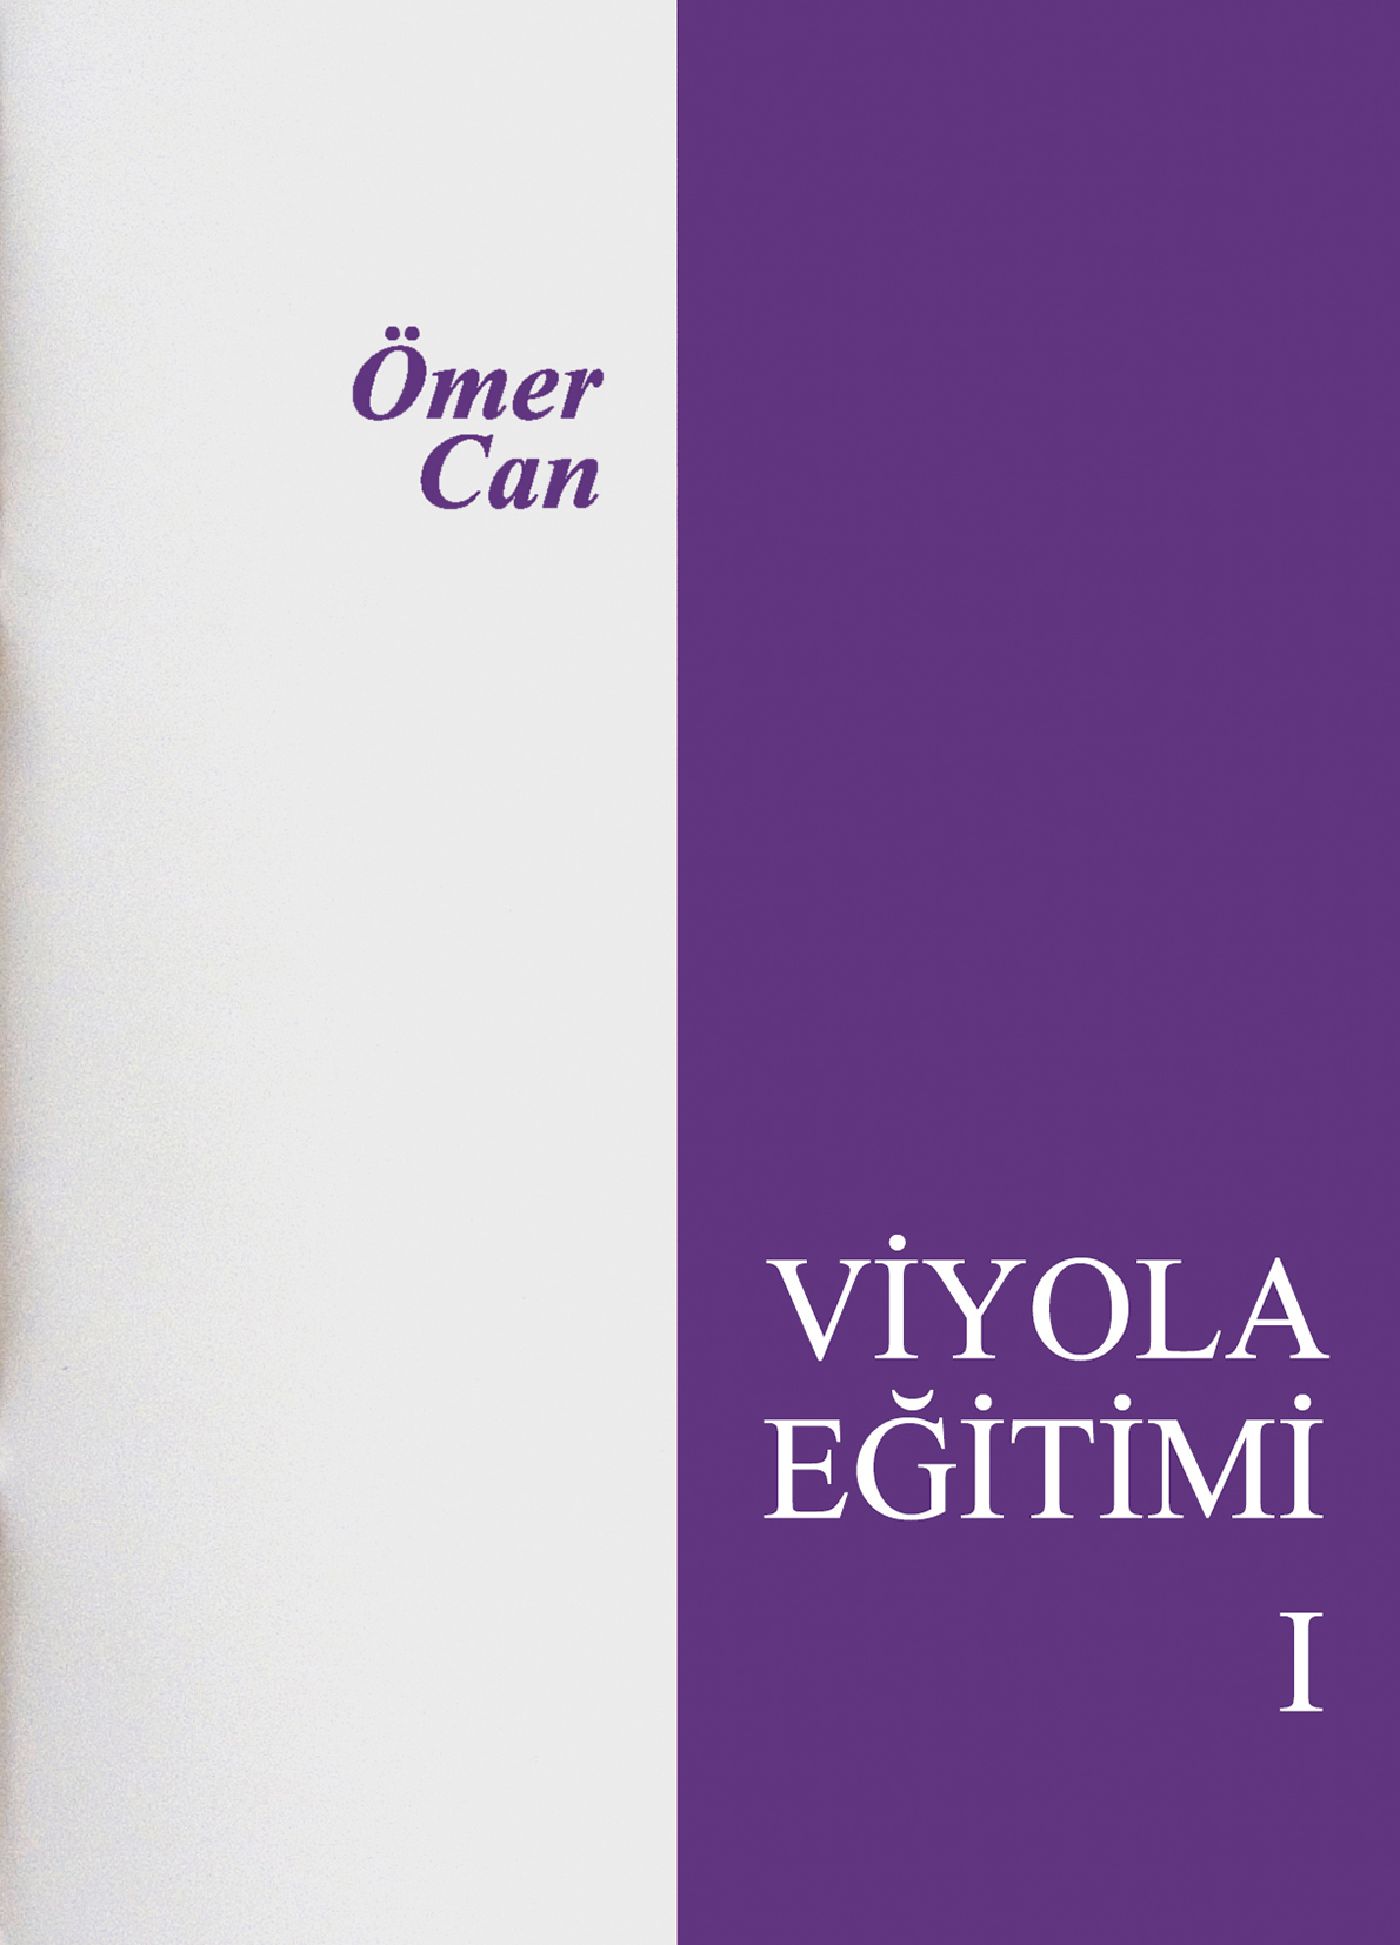 omer_can_viyola_egitimi_1